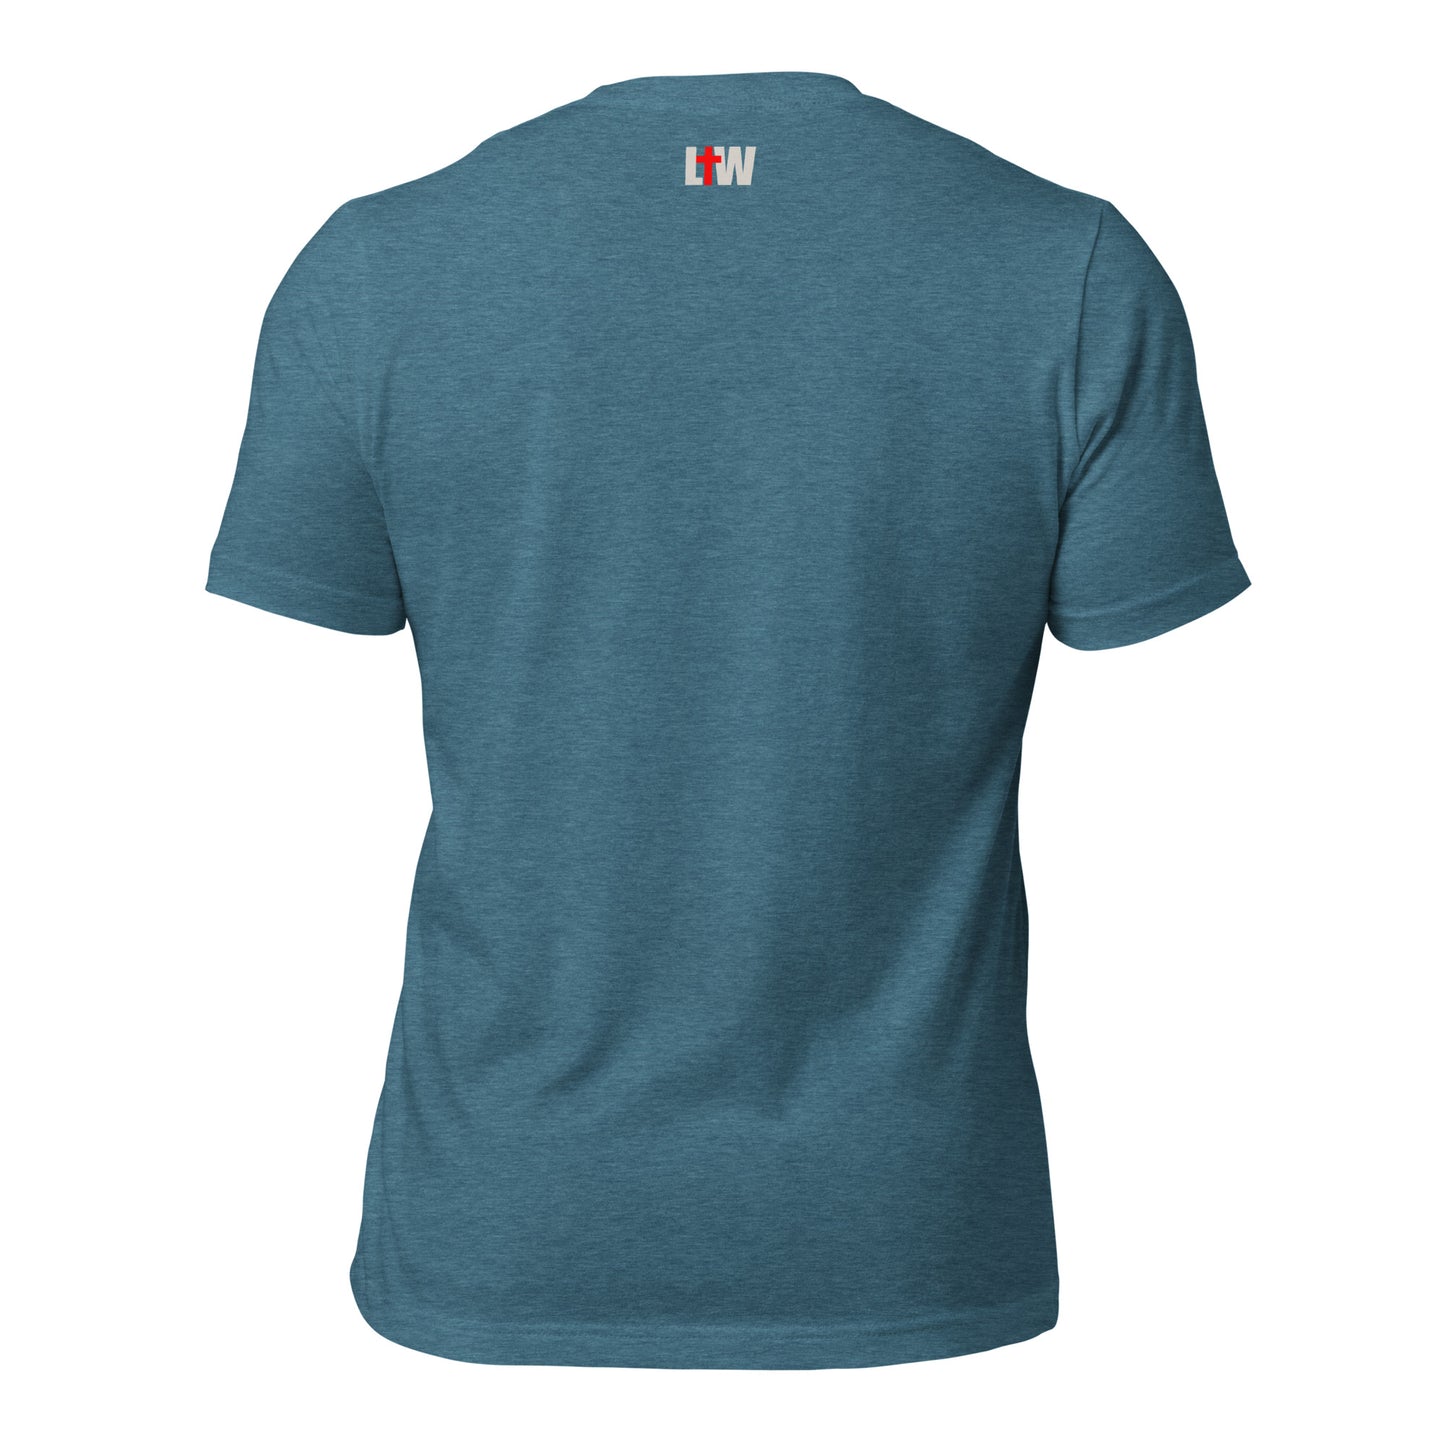 Jesus Unisex T-Shirt